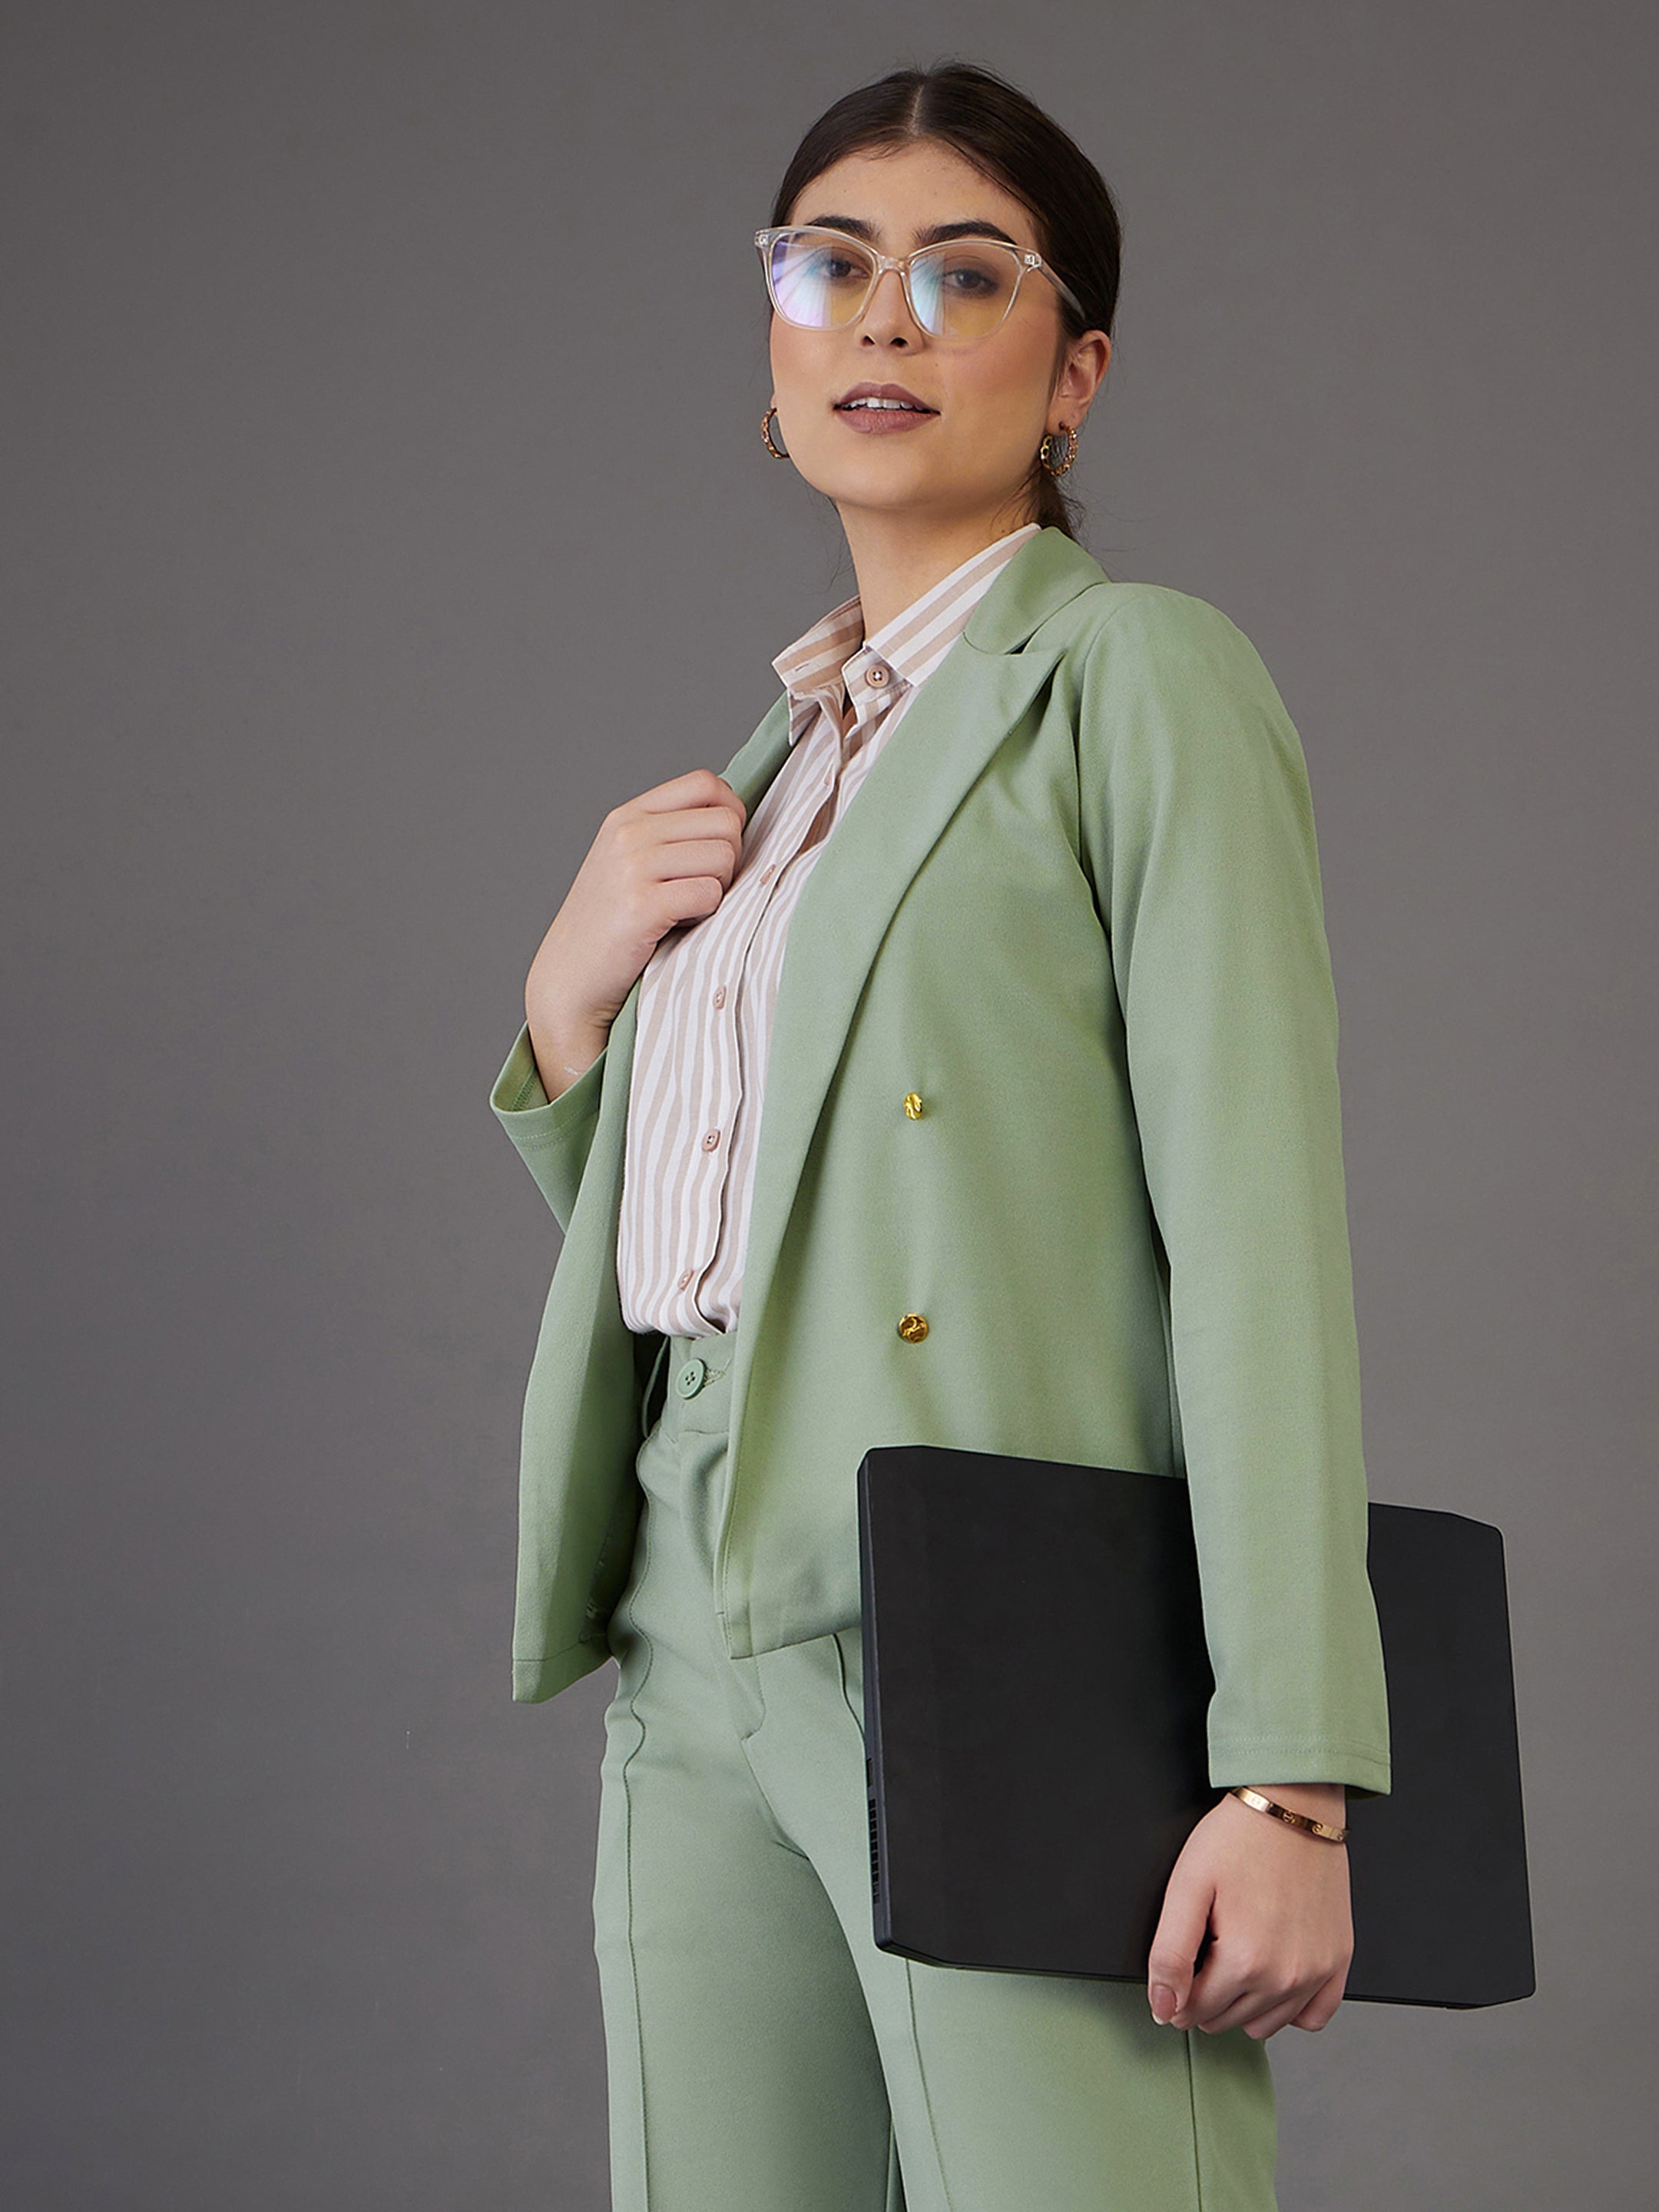 Olive Green Pantsuit for Women, 2 Piece Notchcollar Blazer